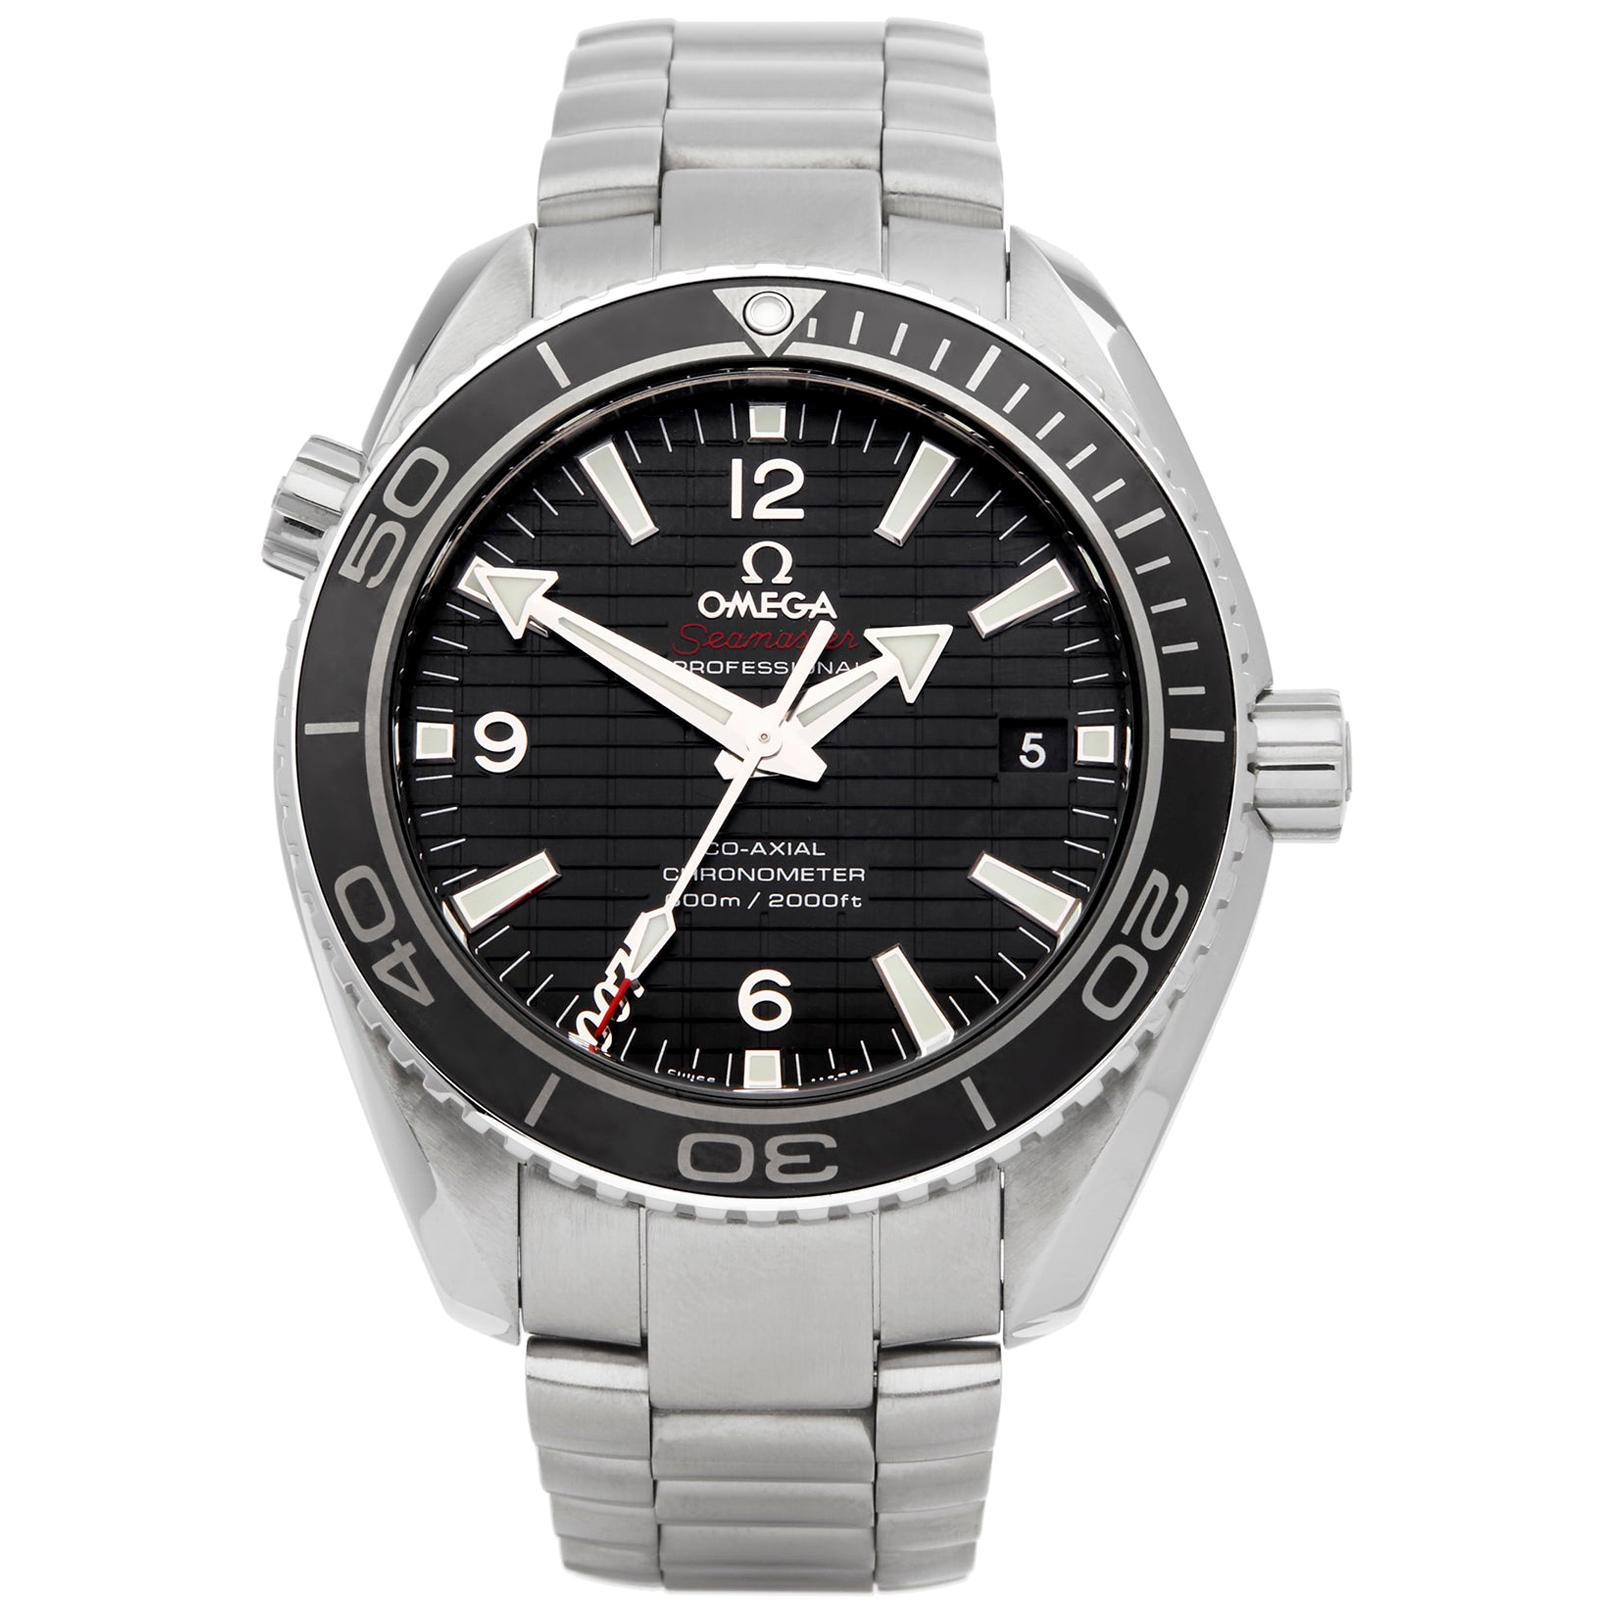 Omega Seamaster 007 James Bond Stainless Steel 23230422101004 Wristwatch